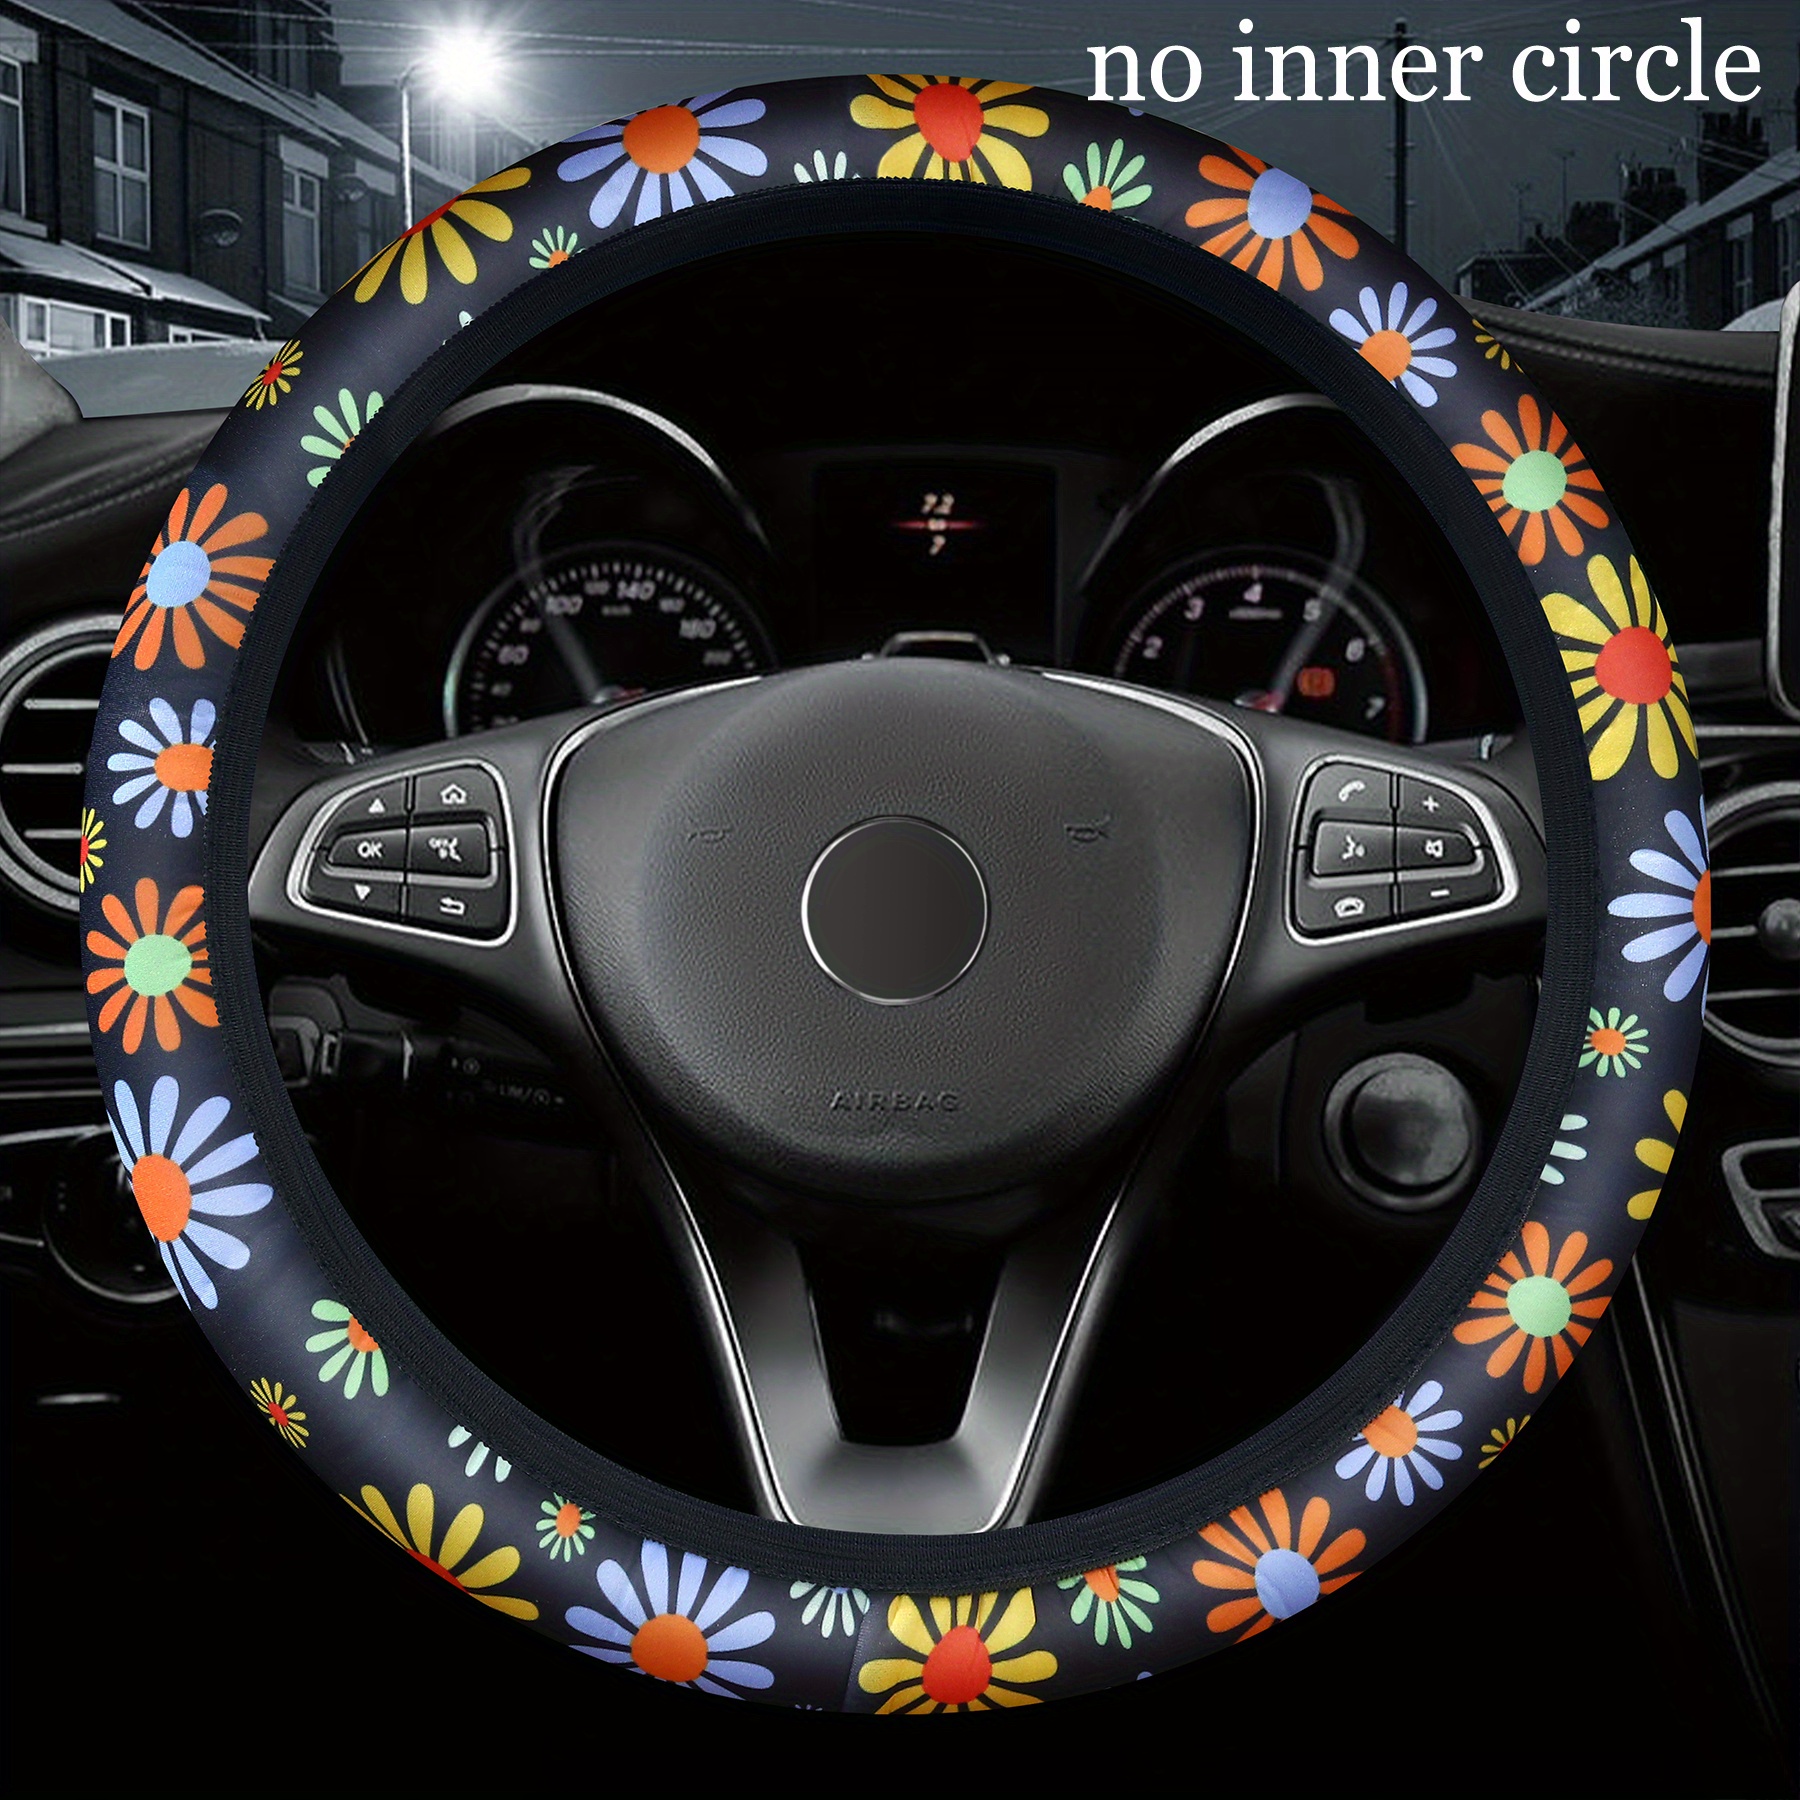 Daisy Print Car Steering Wheel Cover